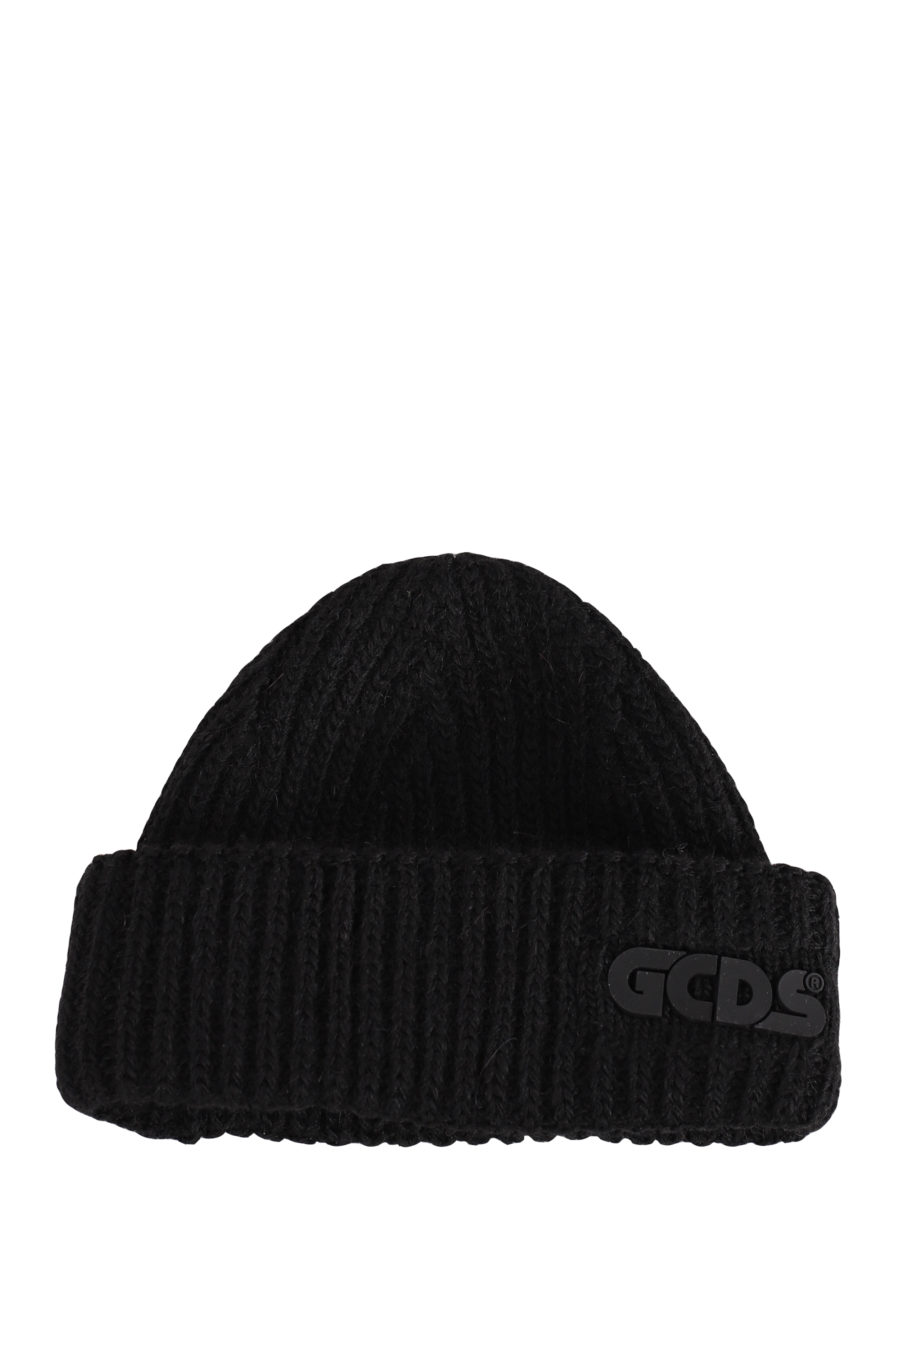 Schwarze Kappe mit Logo - IMG 0422